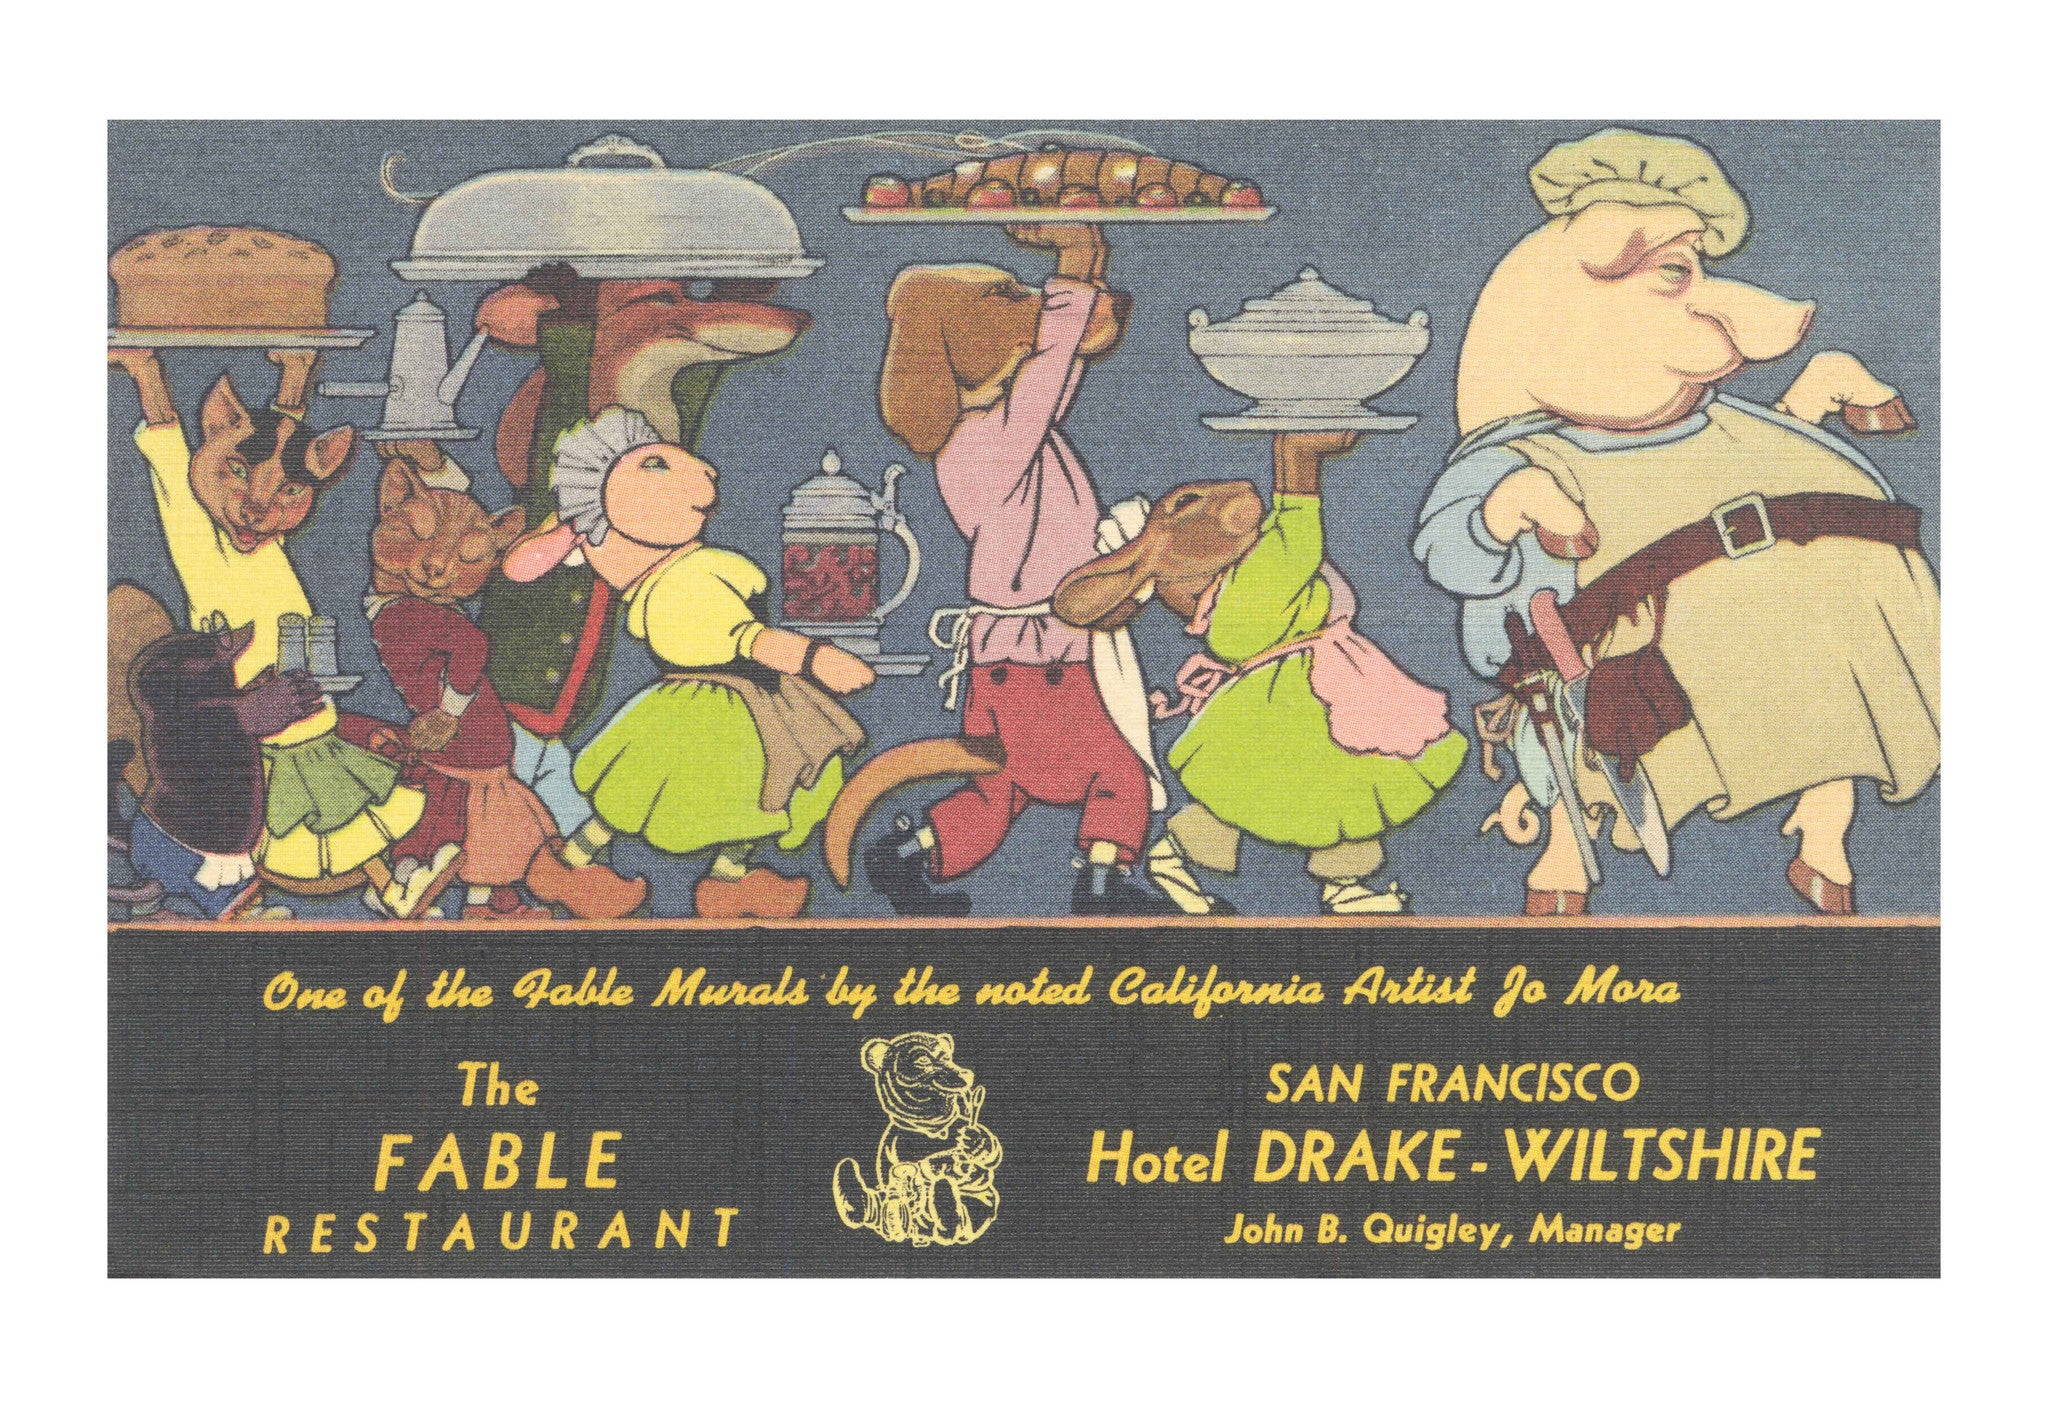 Fable Restaurant, Hotel Drake - Wiltshire, San Francisco 1948